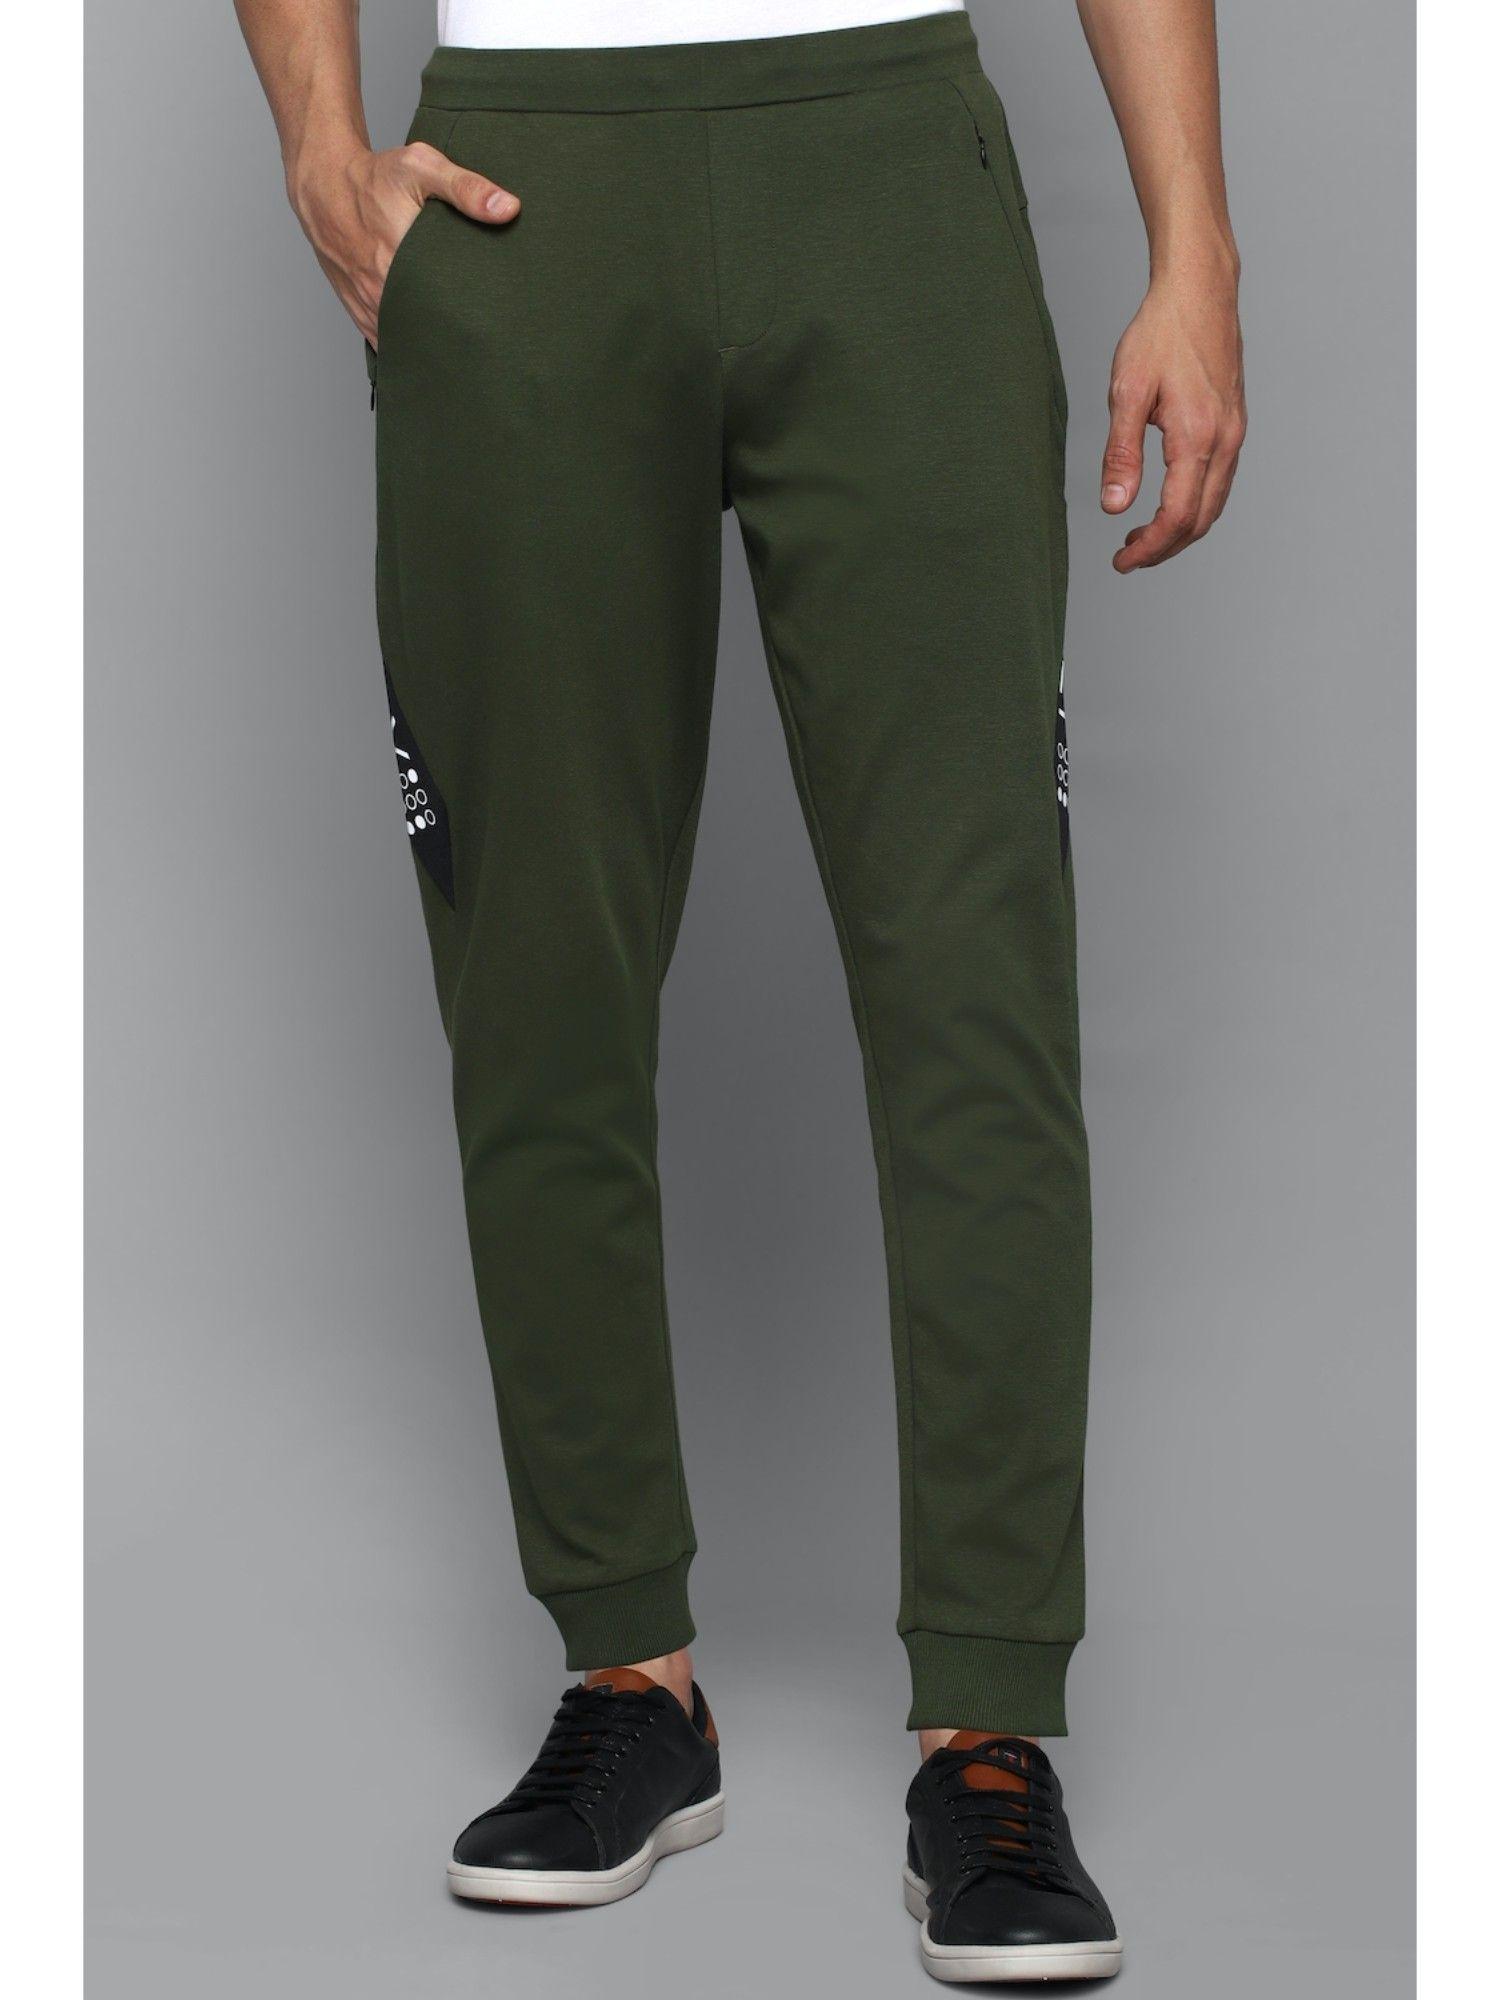 men-graphic-print-regular-fit-olive-jogger-pants